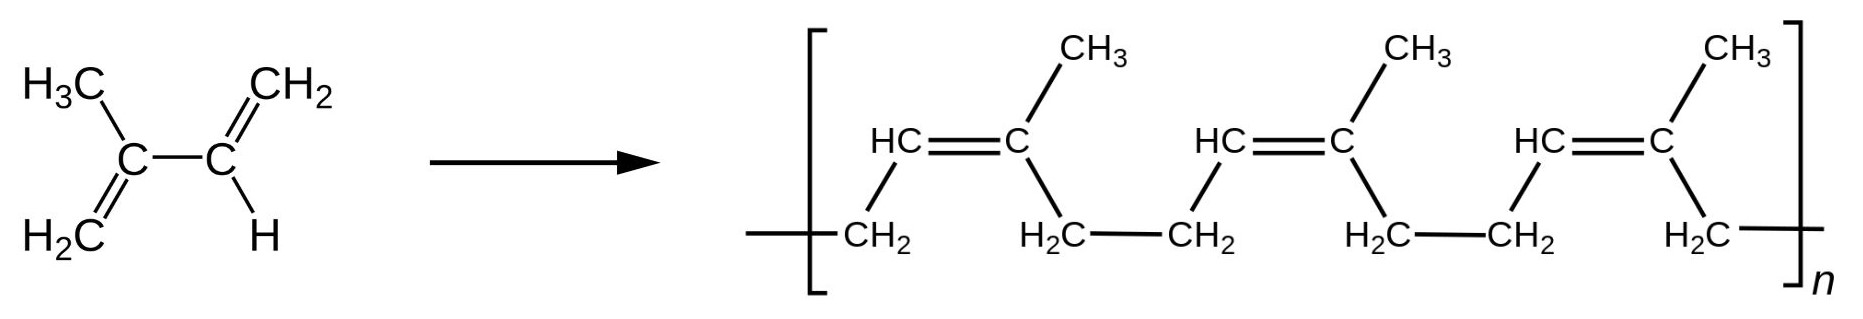 Reaction showing the formation of cis-polyisoprene or rubber from isoprene (2-methyl-1,3-butadiene).